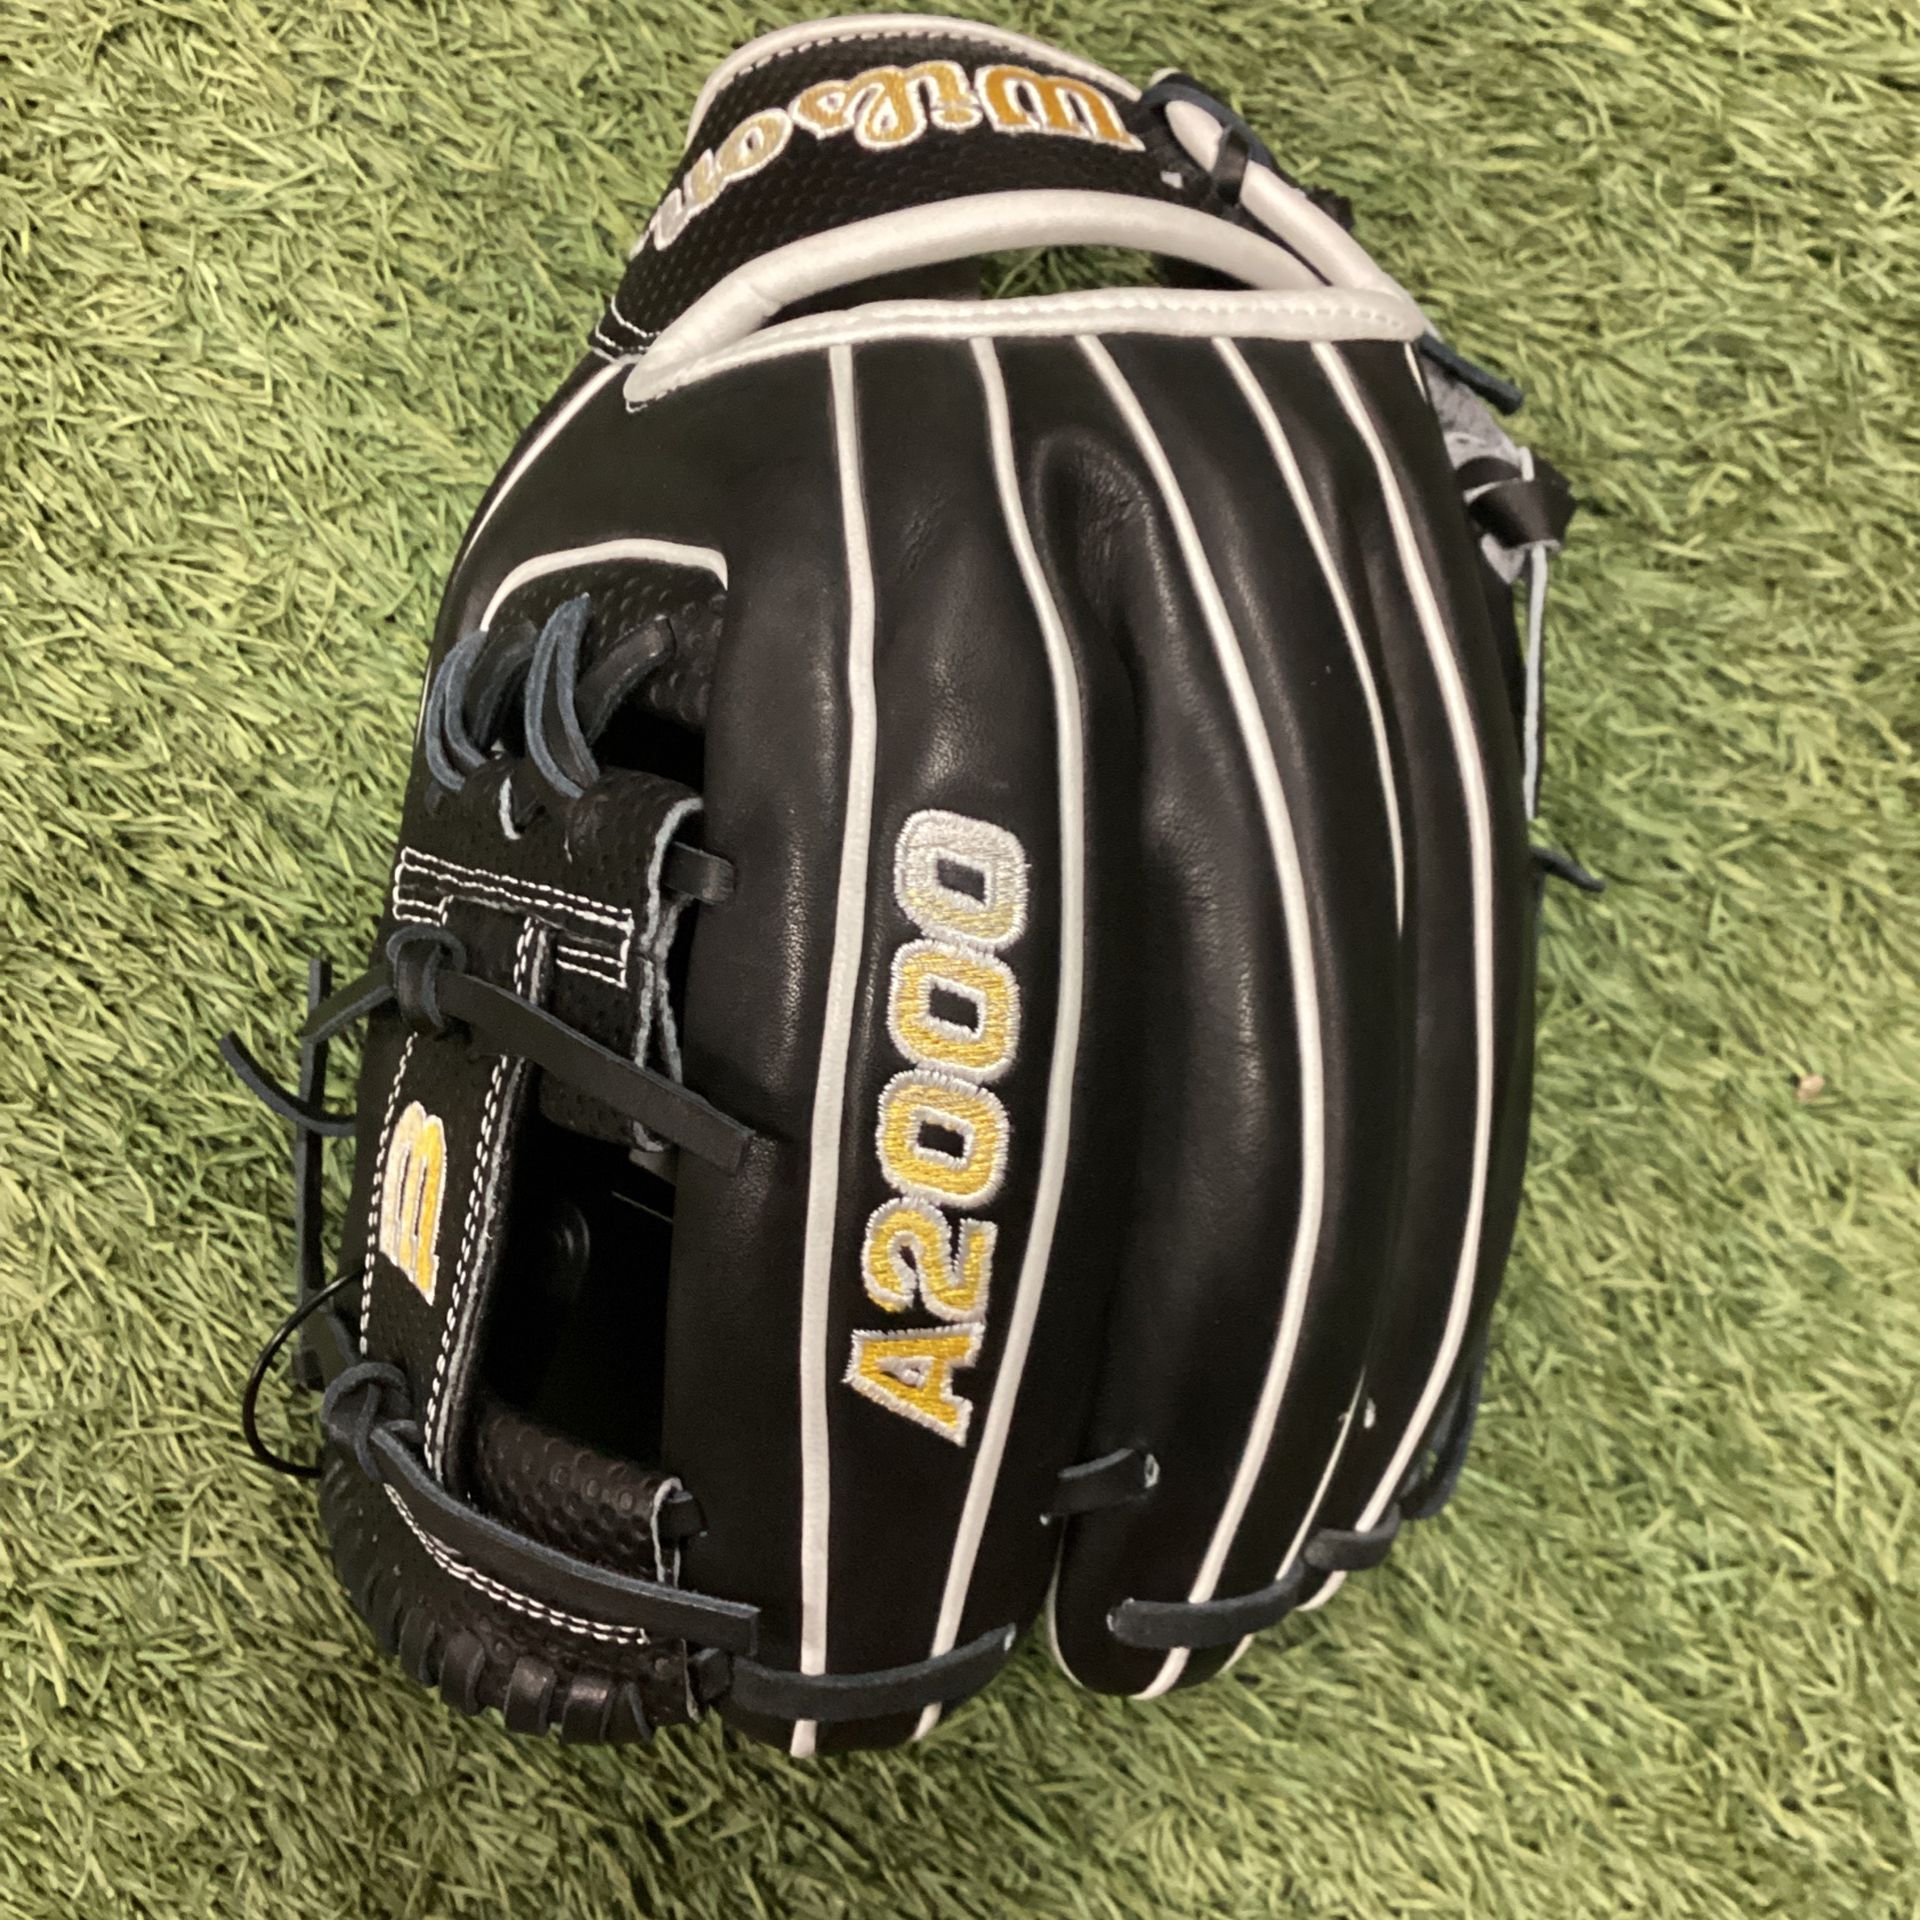 New Wilson SC1786 A2000 12.5” Infield Baseball Gloves SKU 2793-12ninetyseven